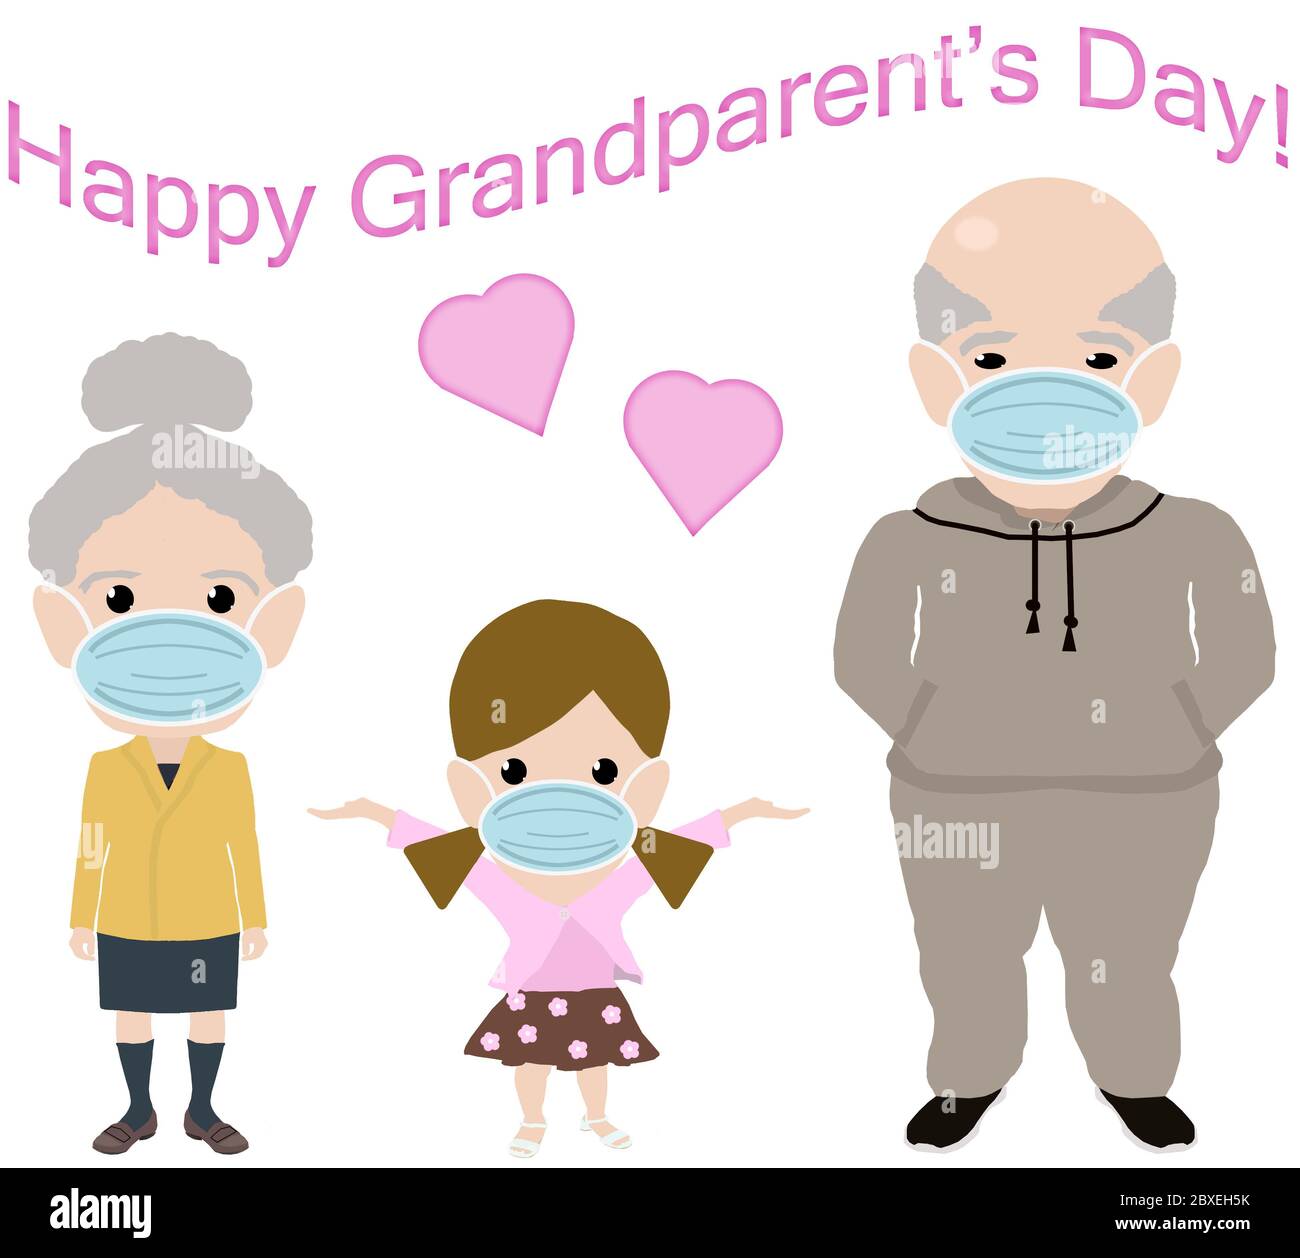 Grandparent's Day Family in Face Mask. Grandma, Grandpa, Grand Daughter. Stock Photo